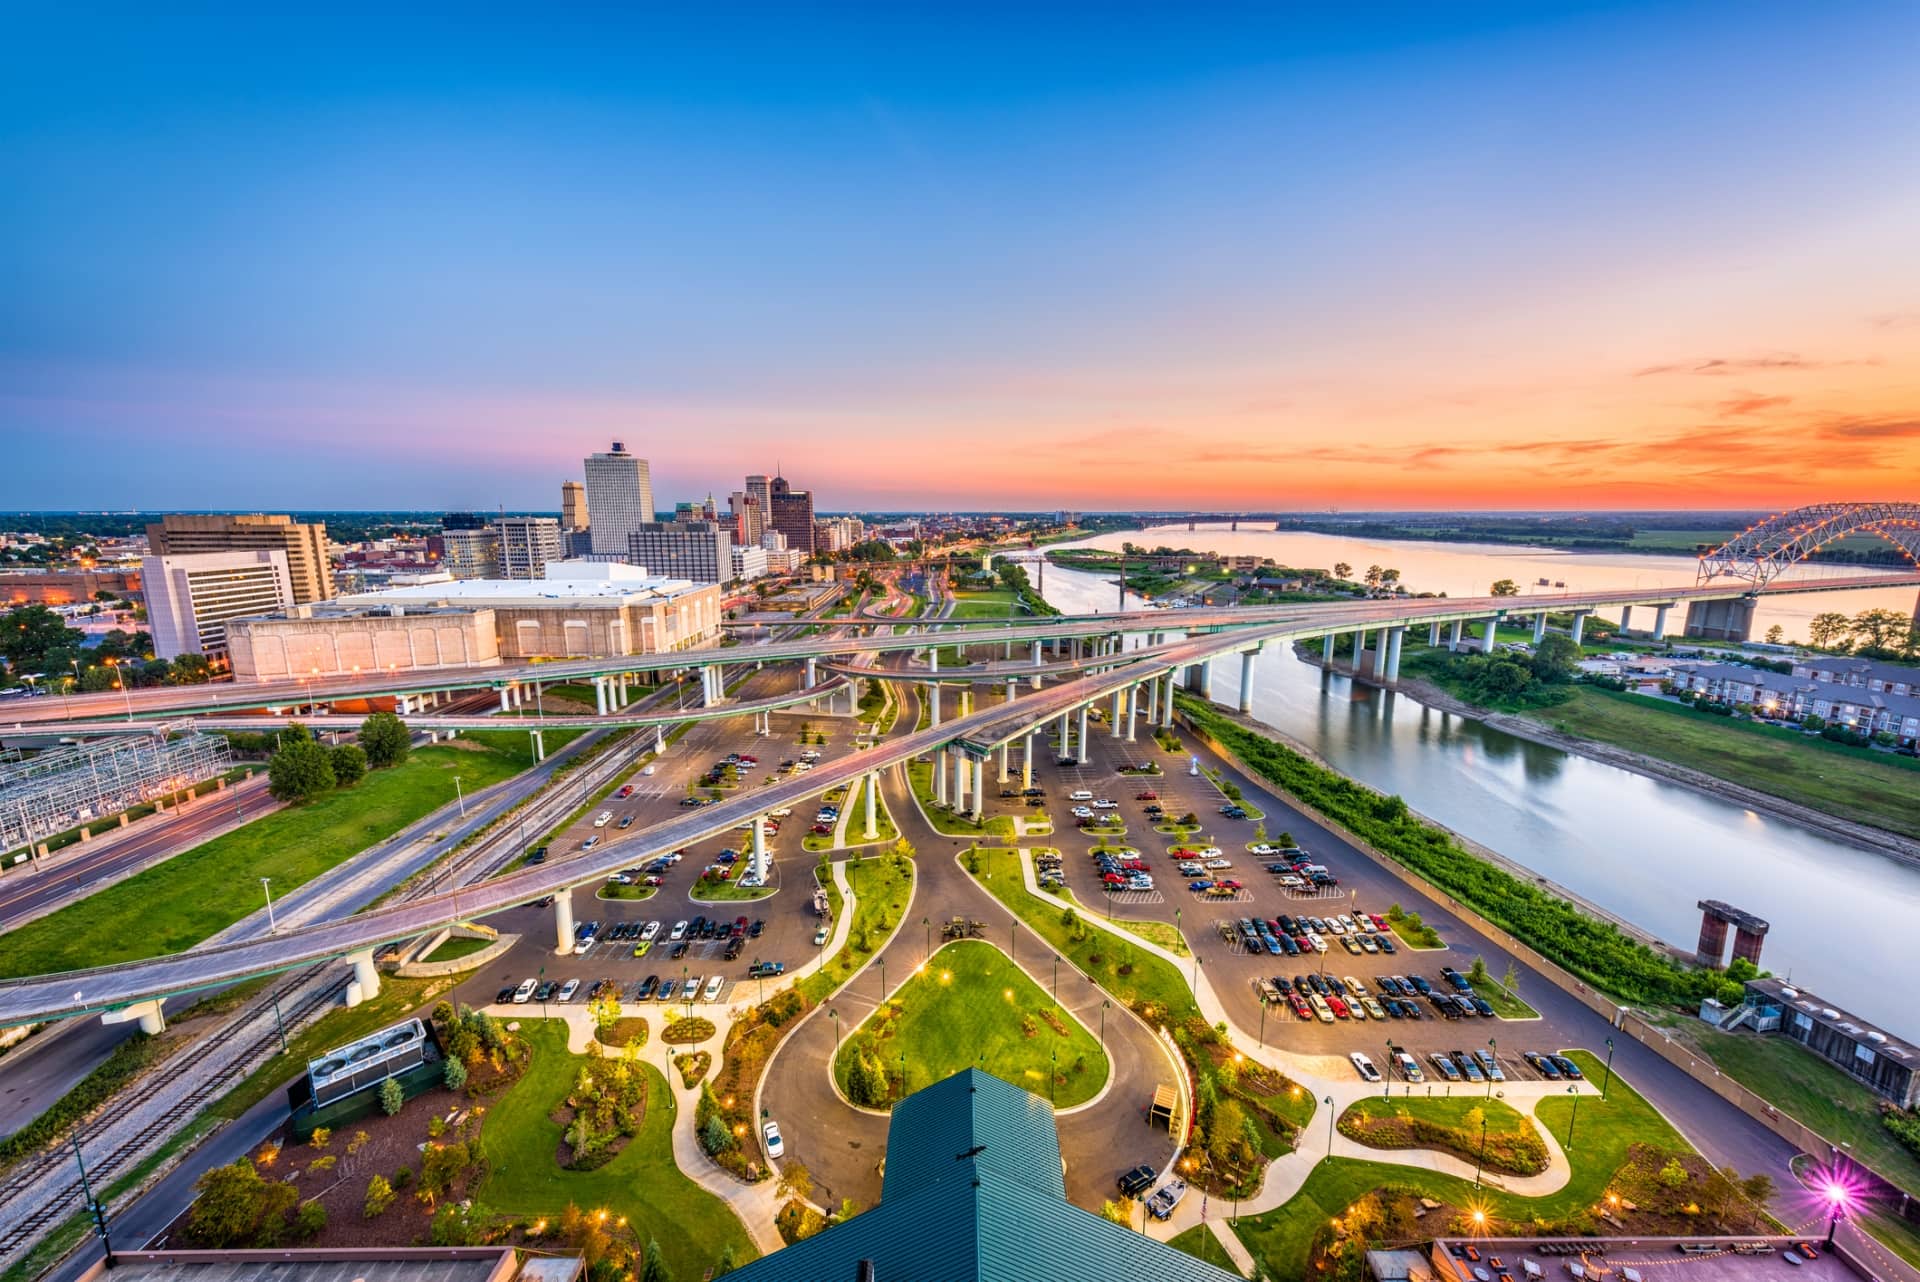 A skyline of Memphis